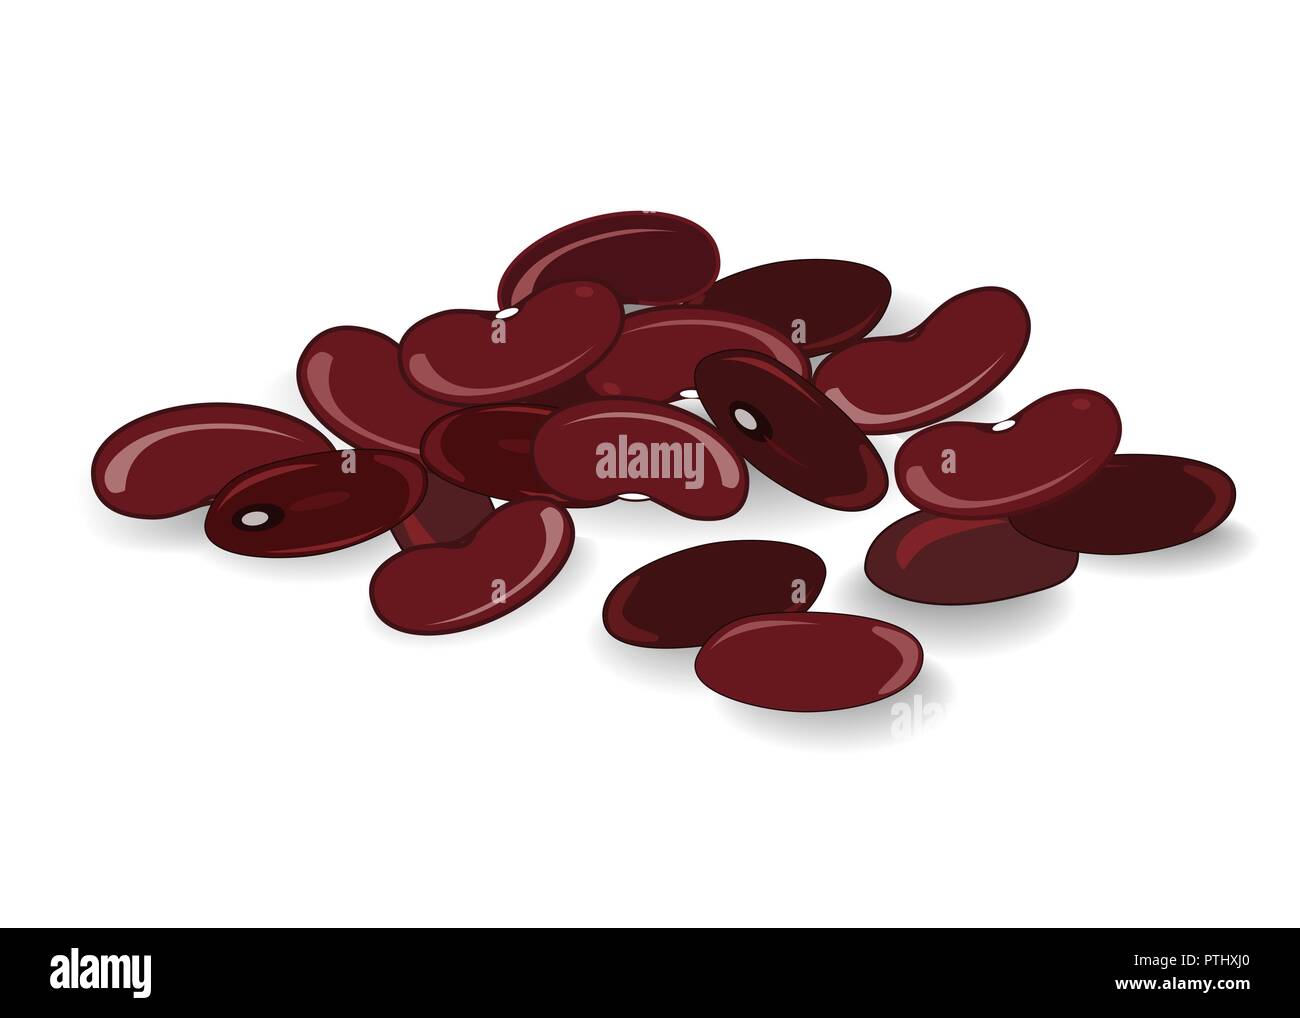 Red kidney bean isolated on white background. Vector illustration Stock Vector